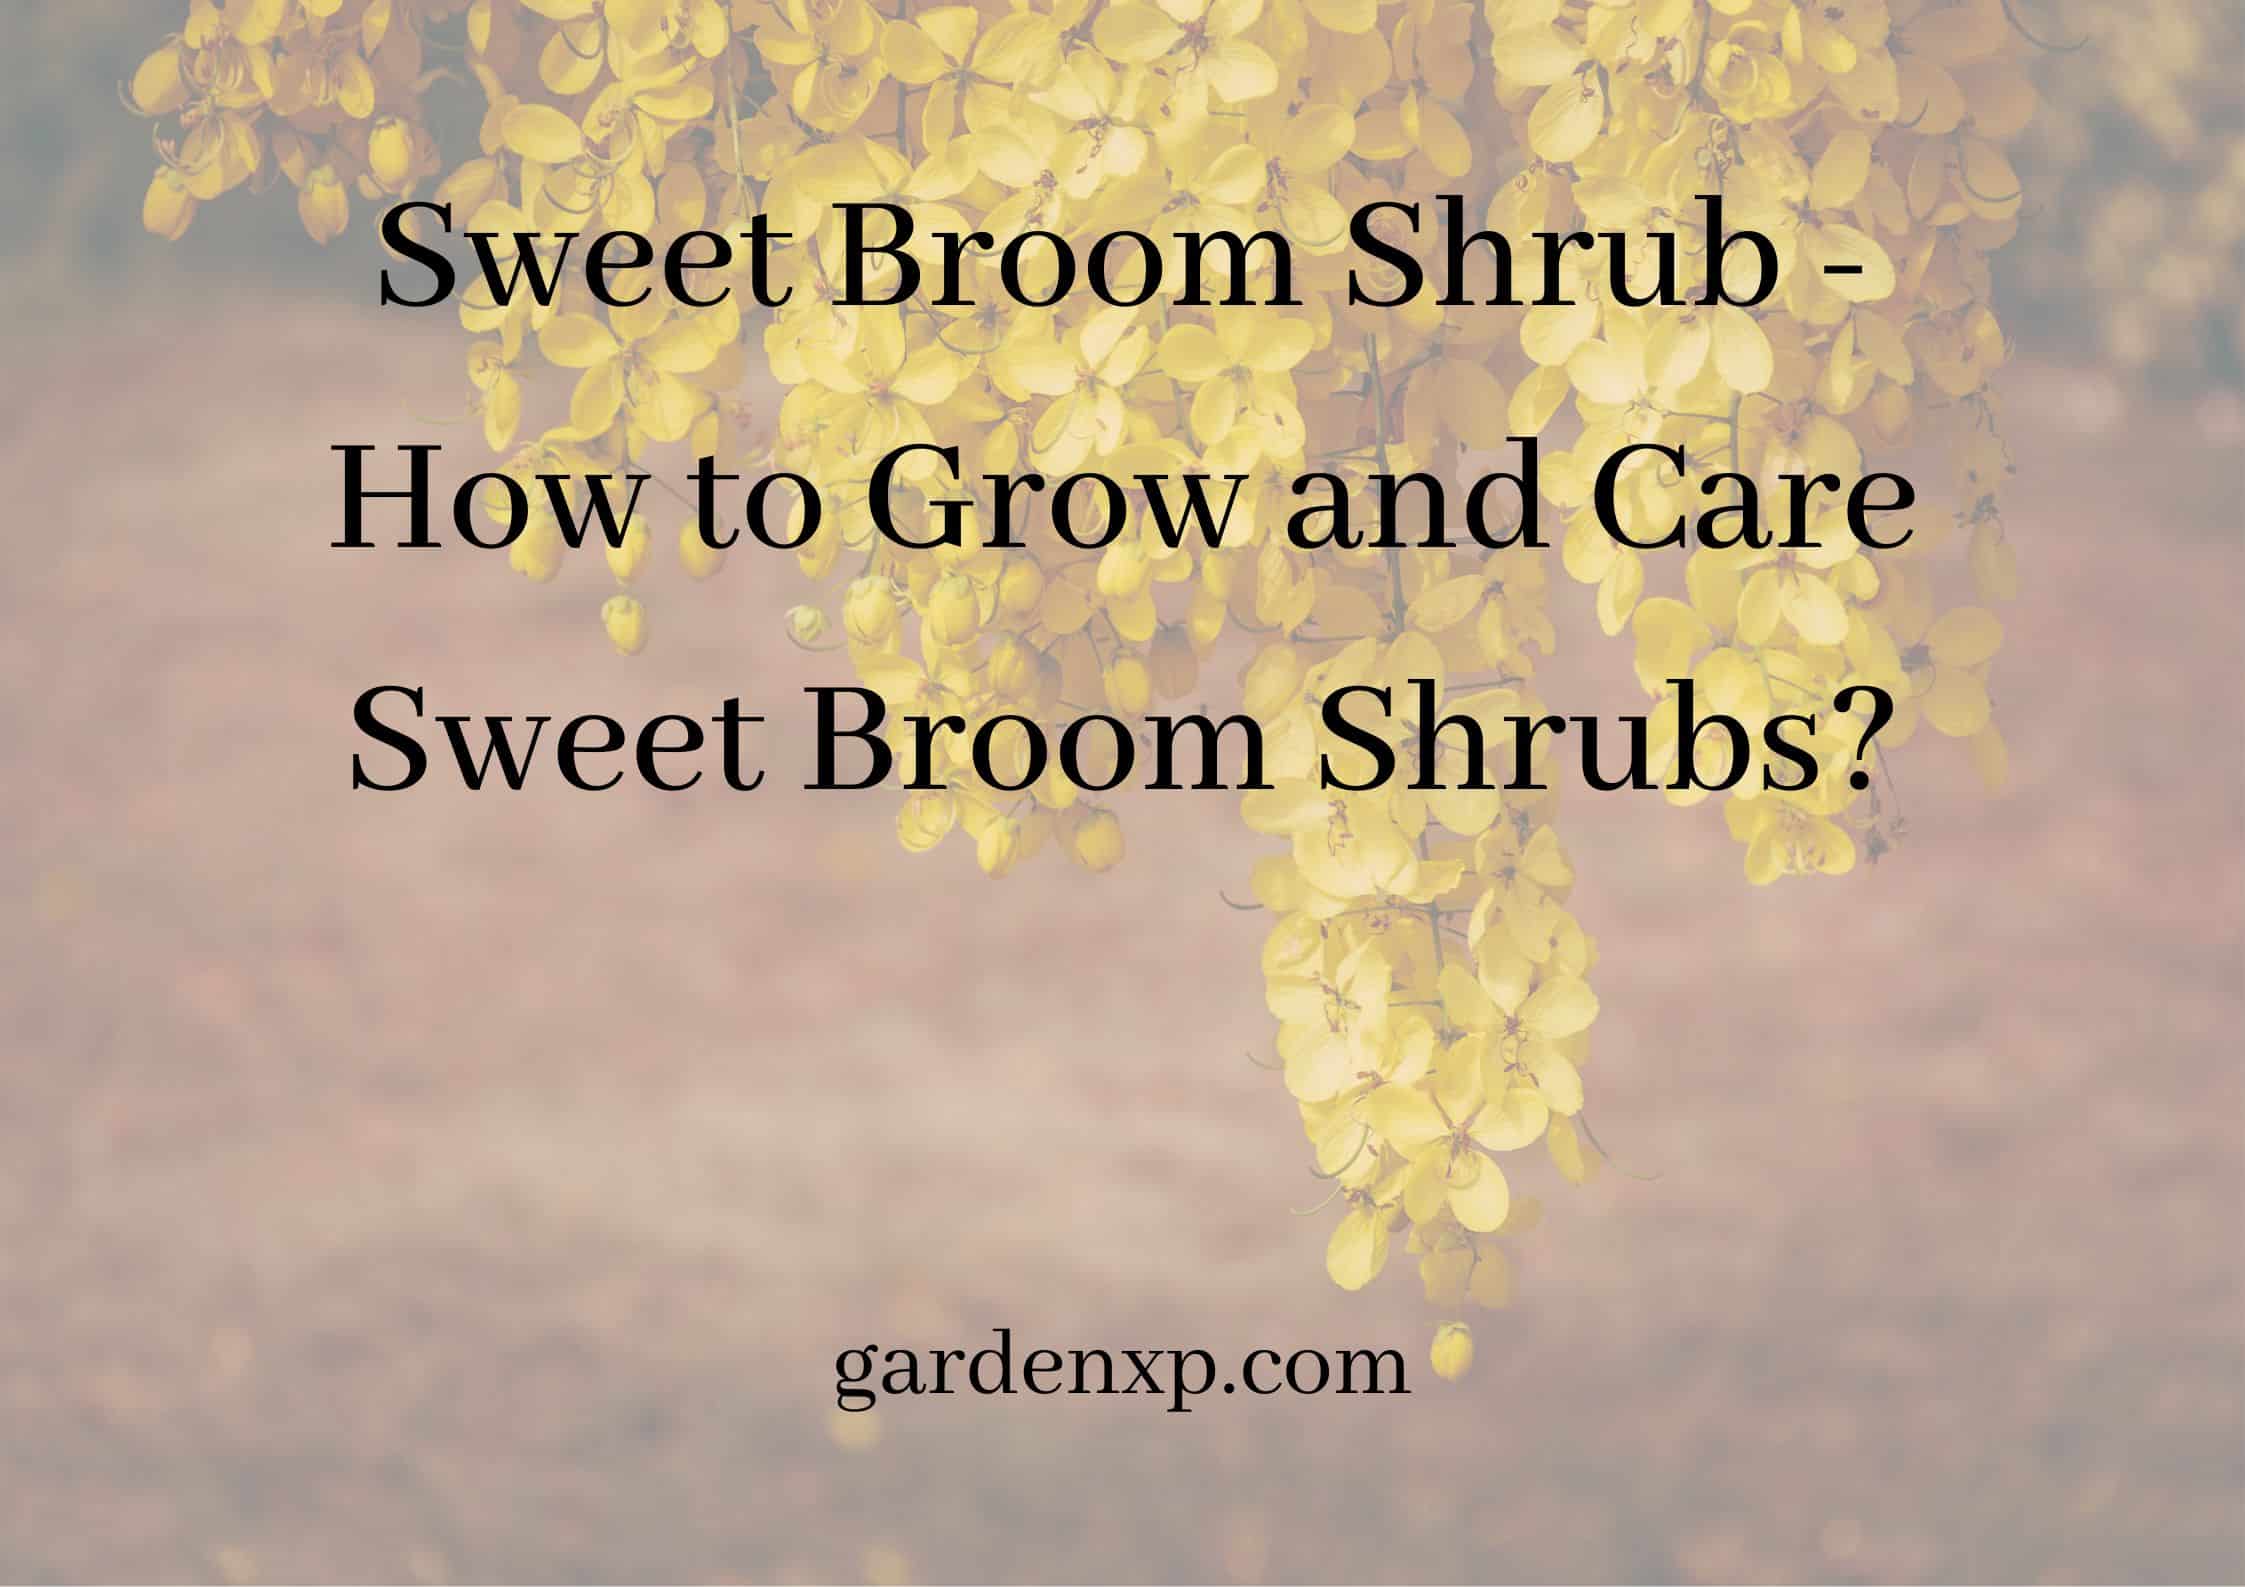 Sweet Broom Shrub - How to Grow and Care Sweet Broom Shrubs?